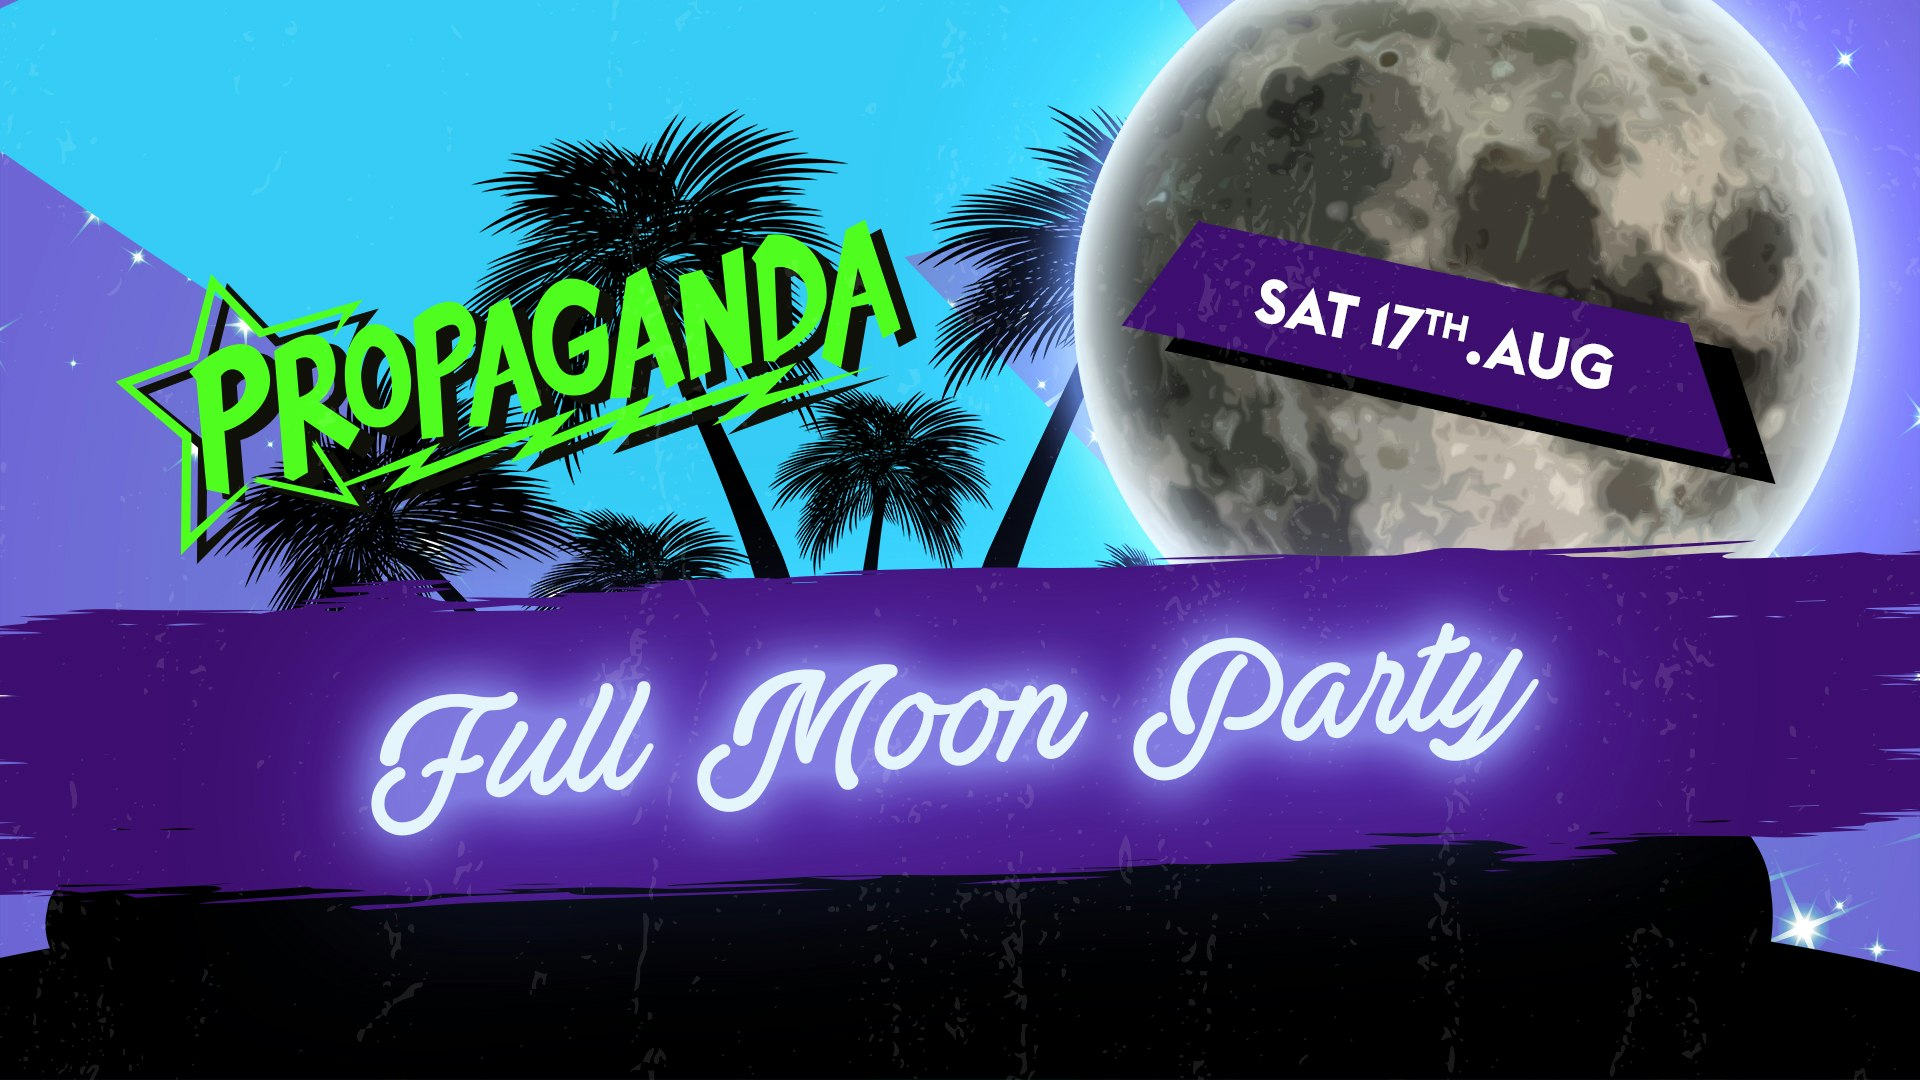 Propaganda Bristol – Full Moon Party